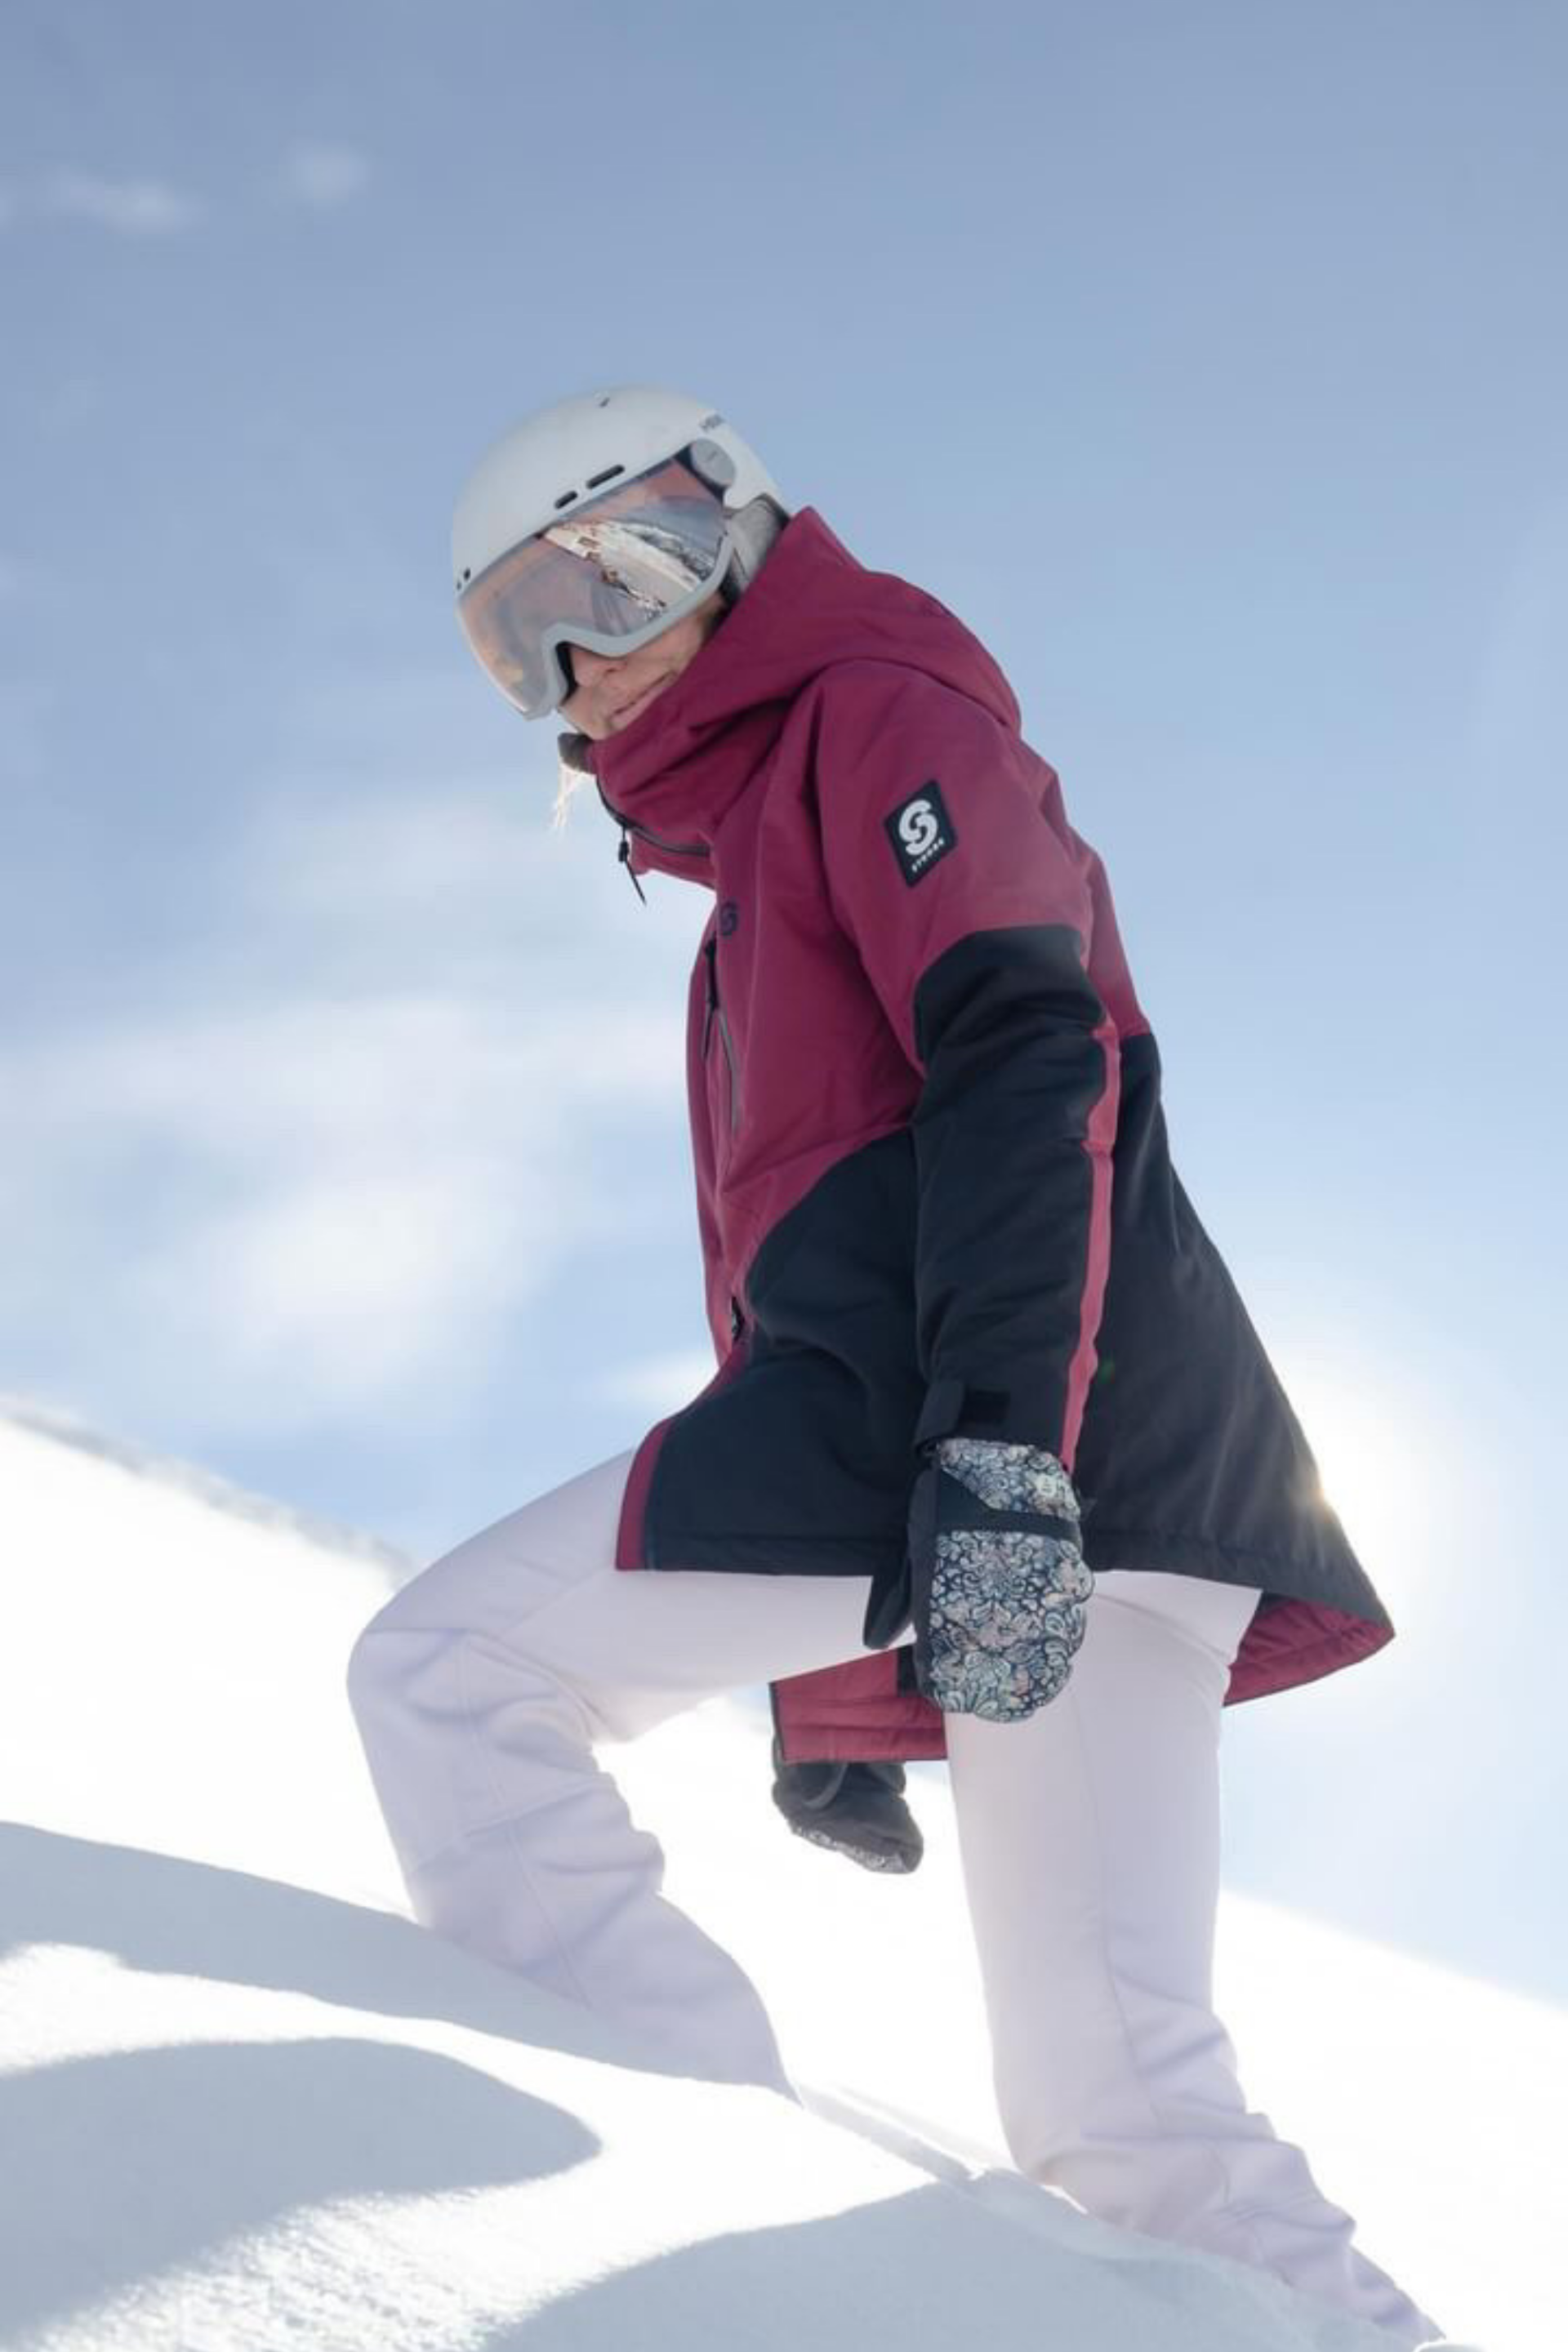 Montec Fawk Ski Jacket - InTheSnow